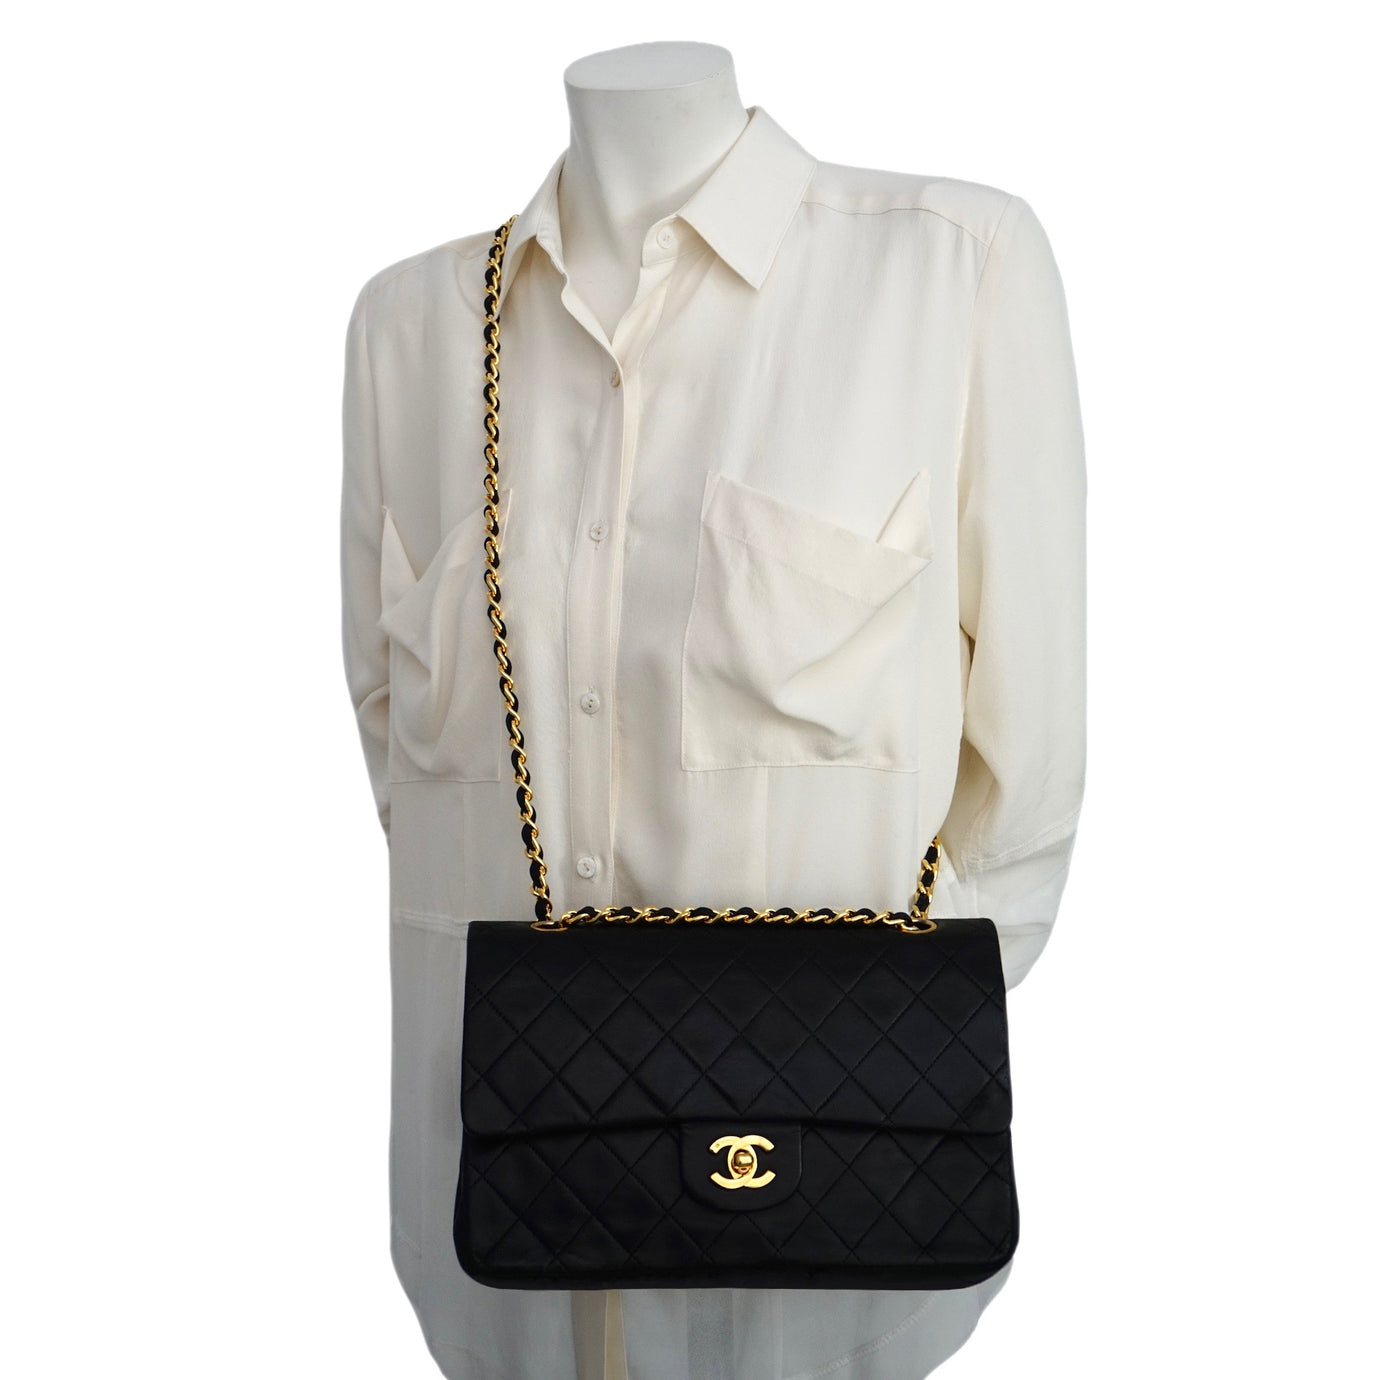 Authentic Chanel Vintage Black Lambskin 2.55 10” Medium Flap Handbag